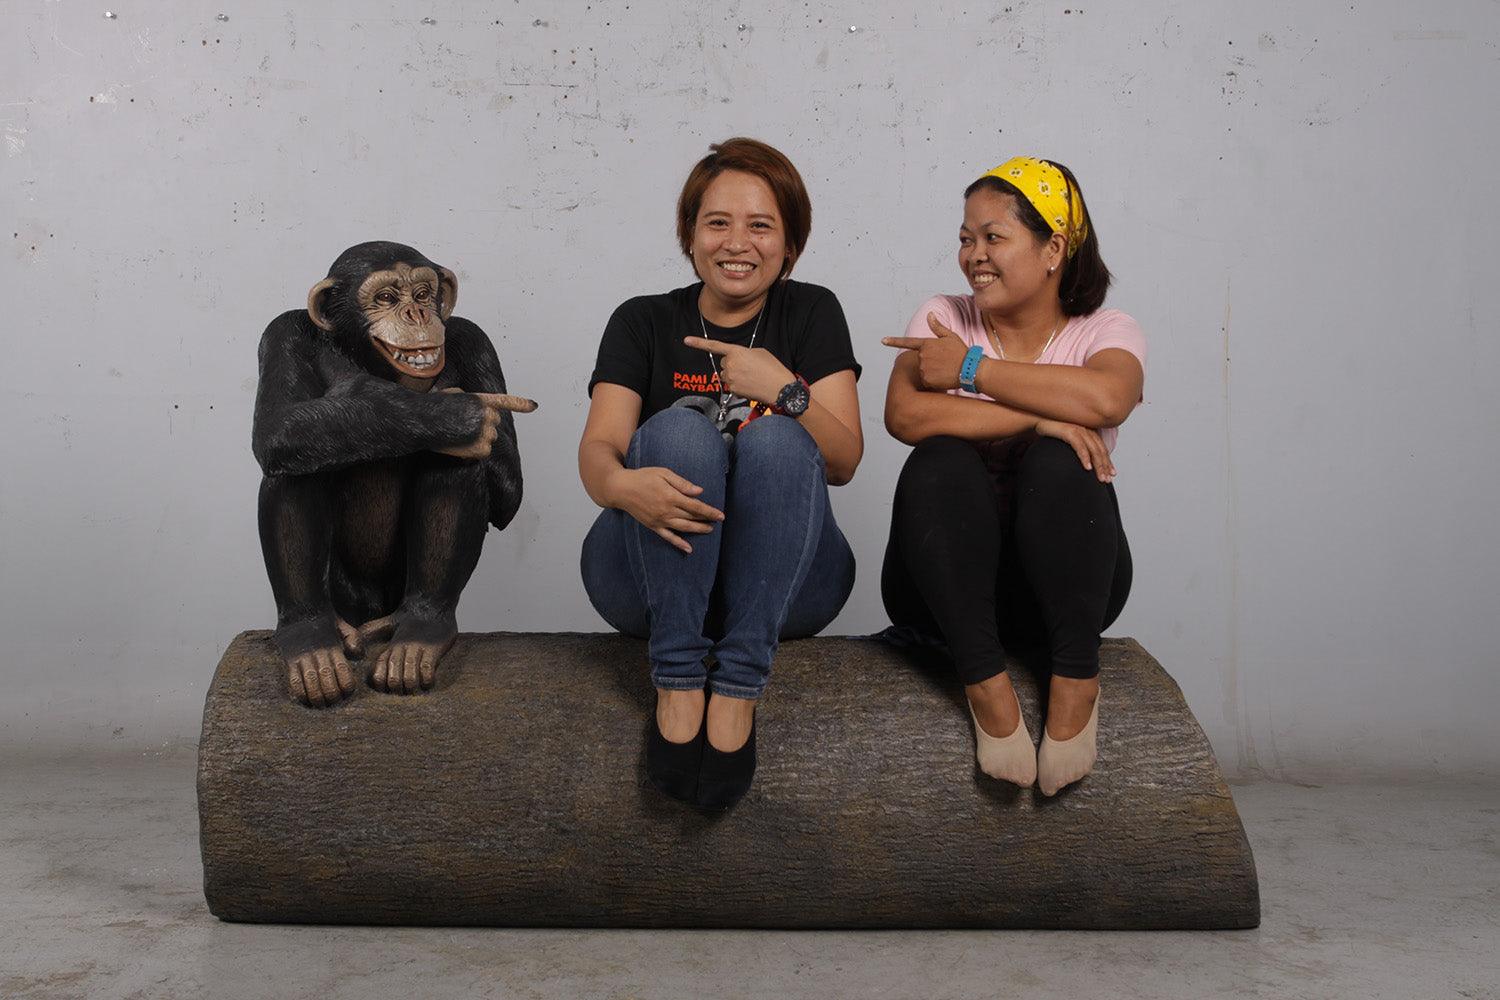 Monkey On Tree Trunk Statue - LM Treasures Prop Rentals 